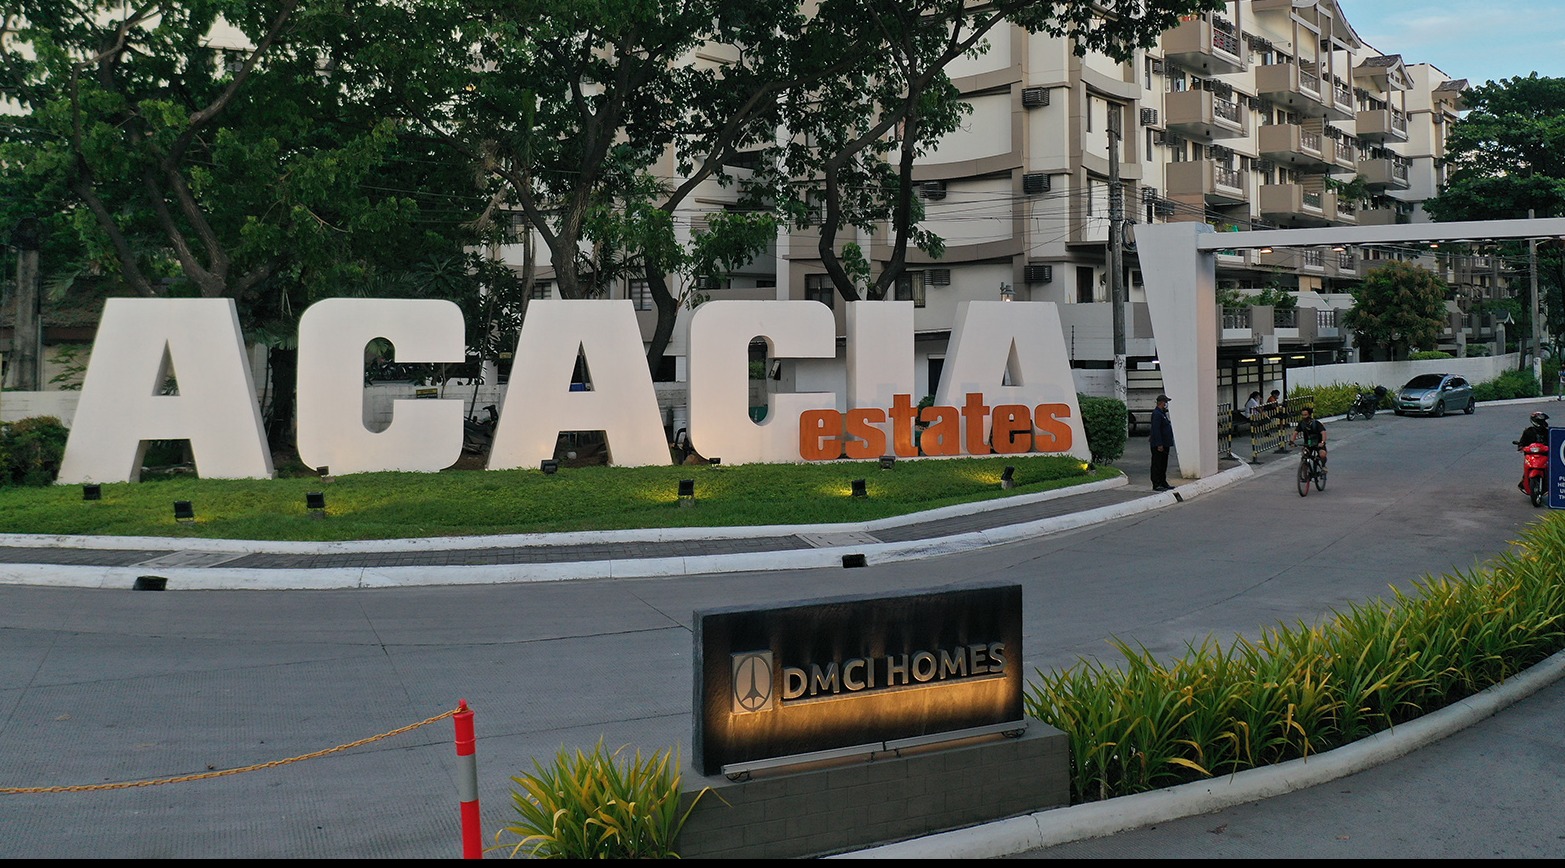 The front of DMCI Homes' Acacia Estates